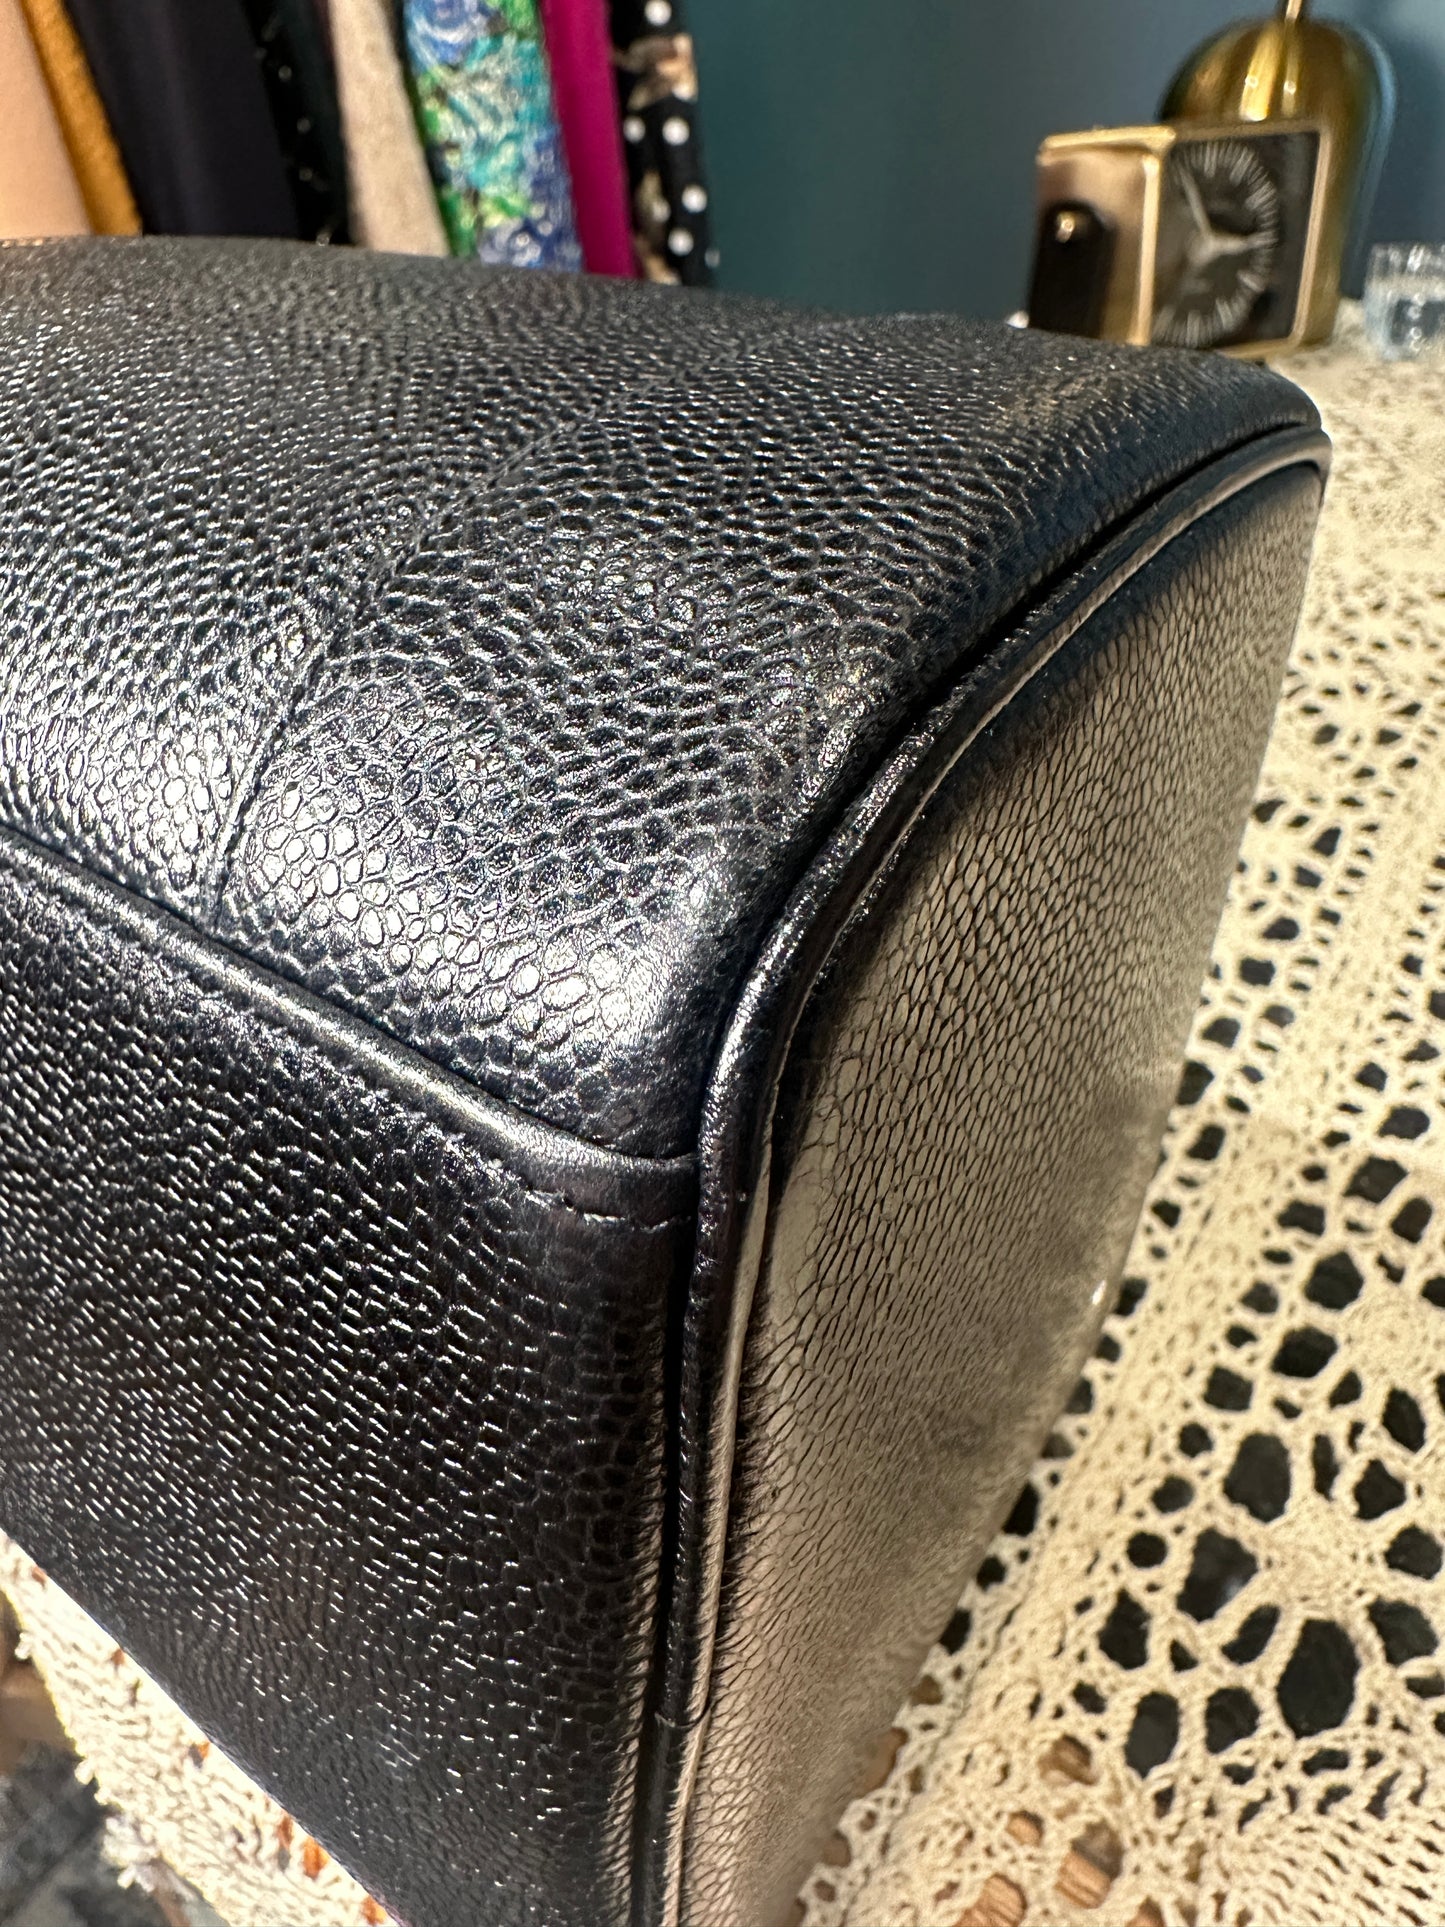 CHANEL VINTAGE 100% Authentic Genuine Leather Makeup Vanity Case Bag, Series 1, Black, 1989-1991, Good Condition